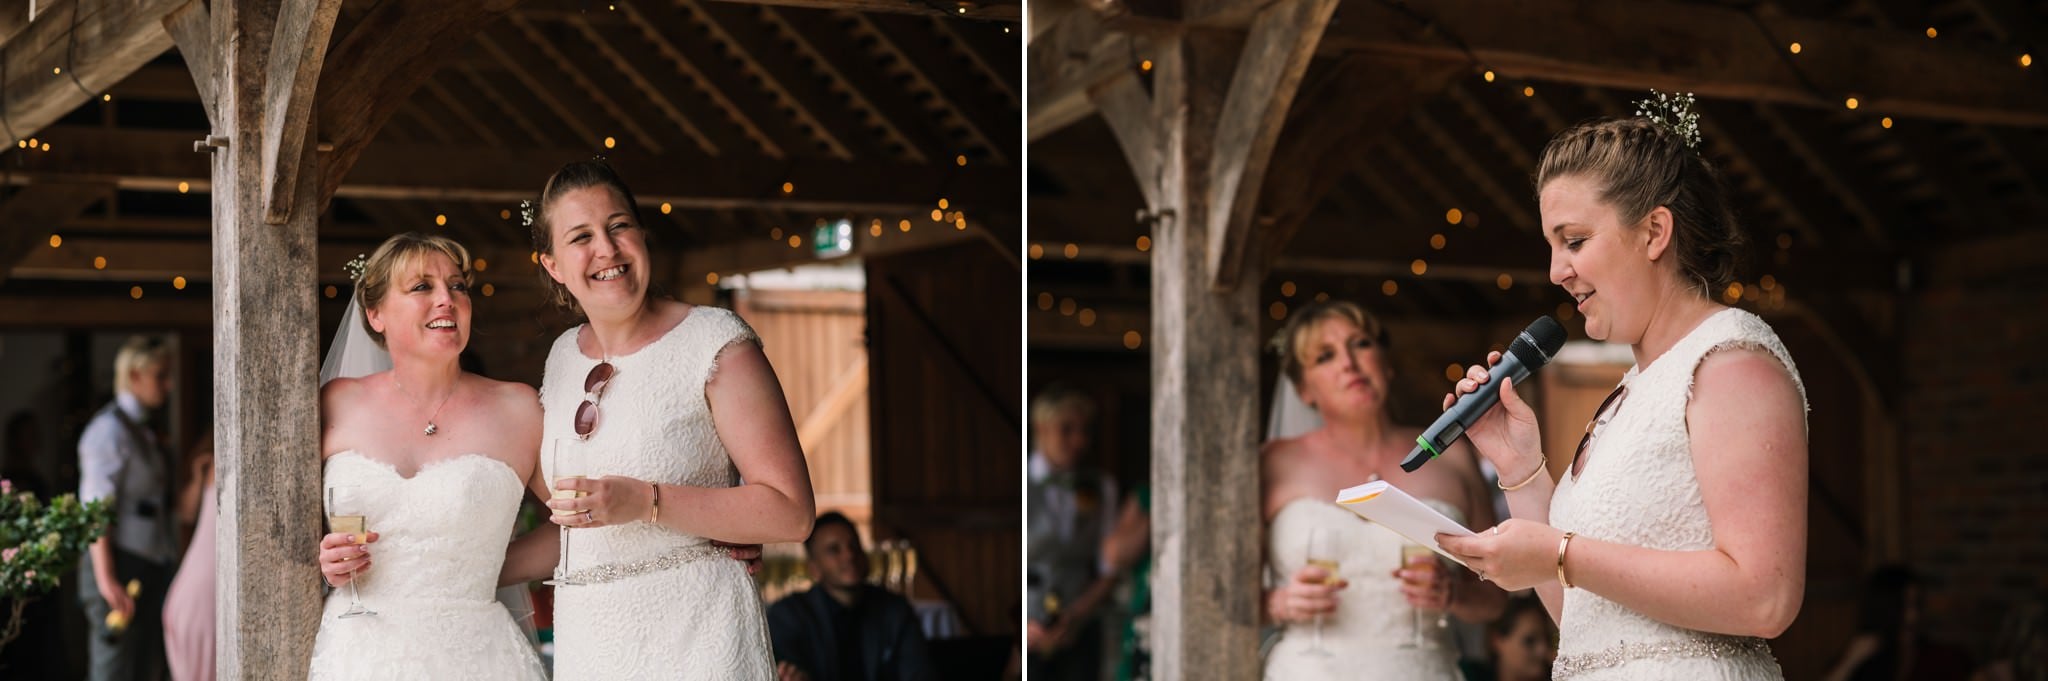 Outdoor speeches at Three Choirs Vineyard wedding in Hampshire